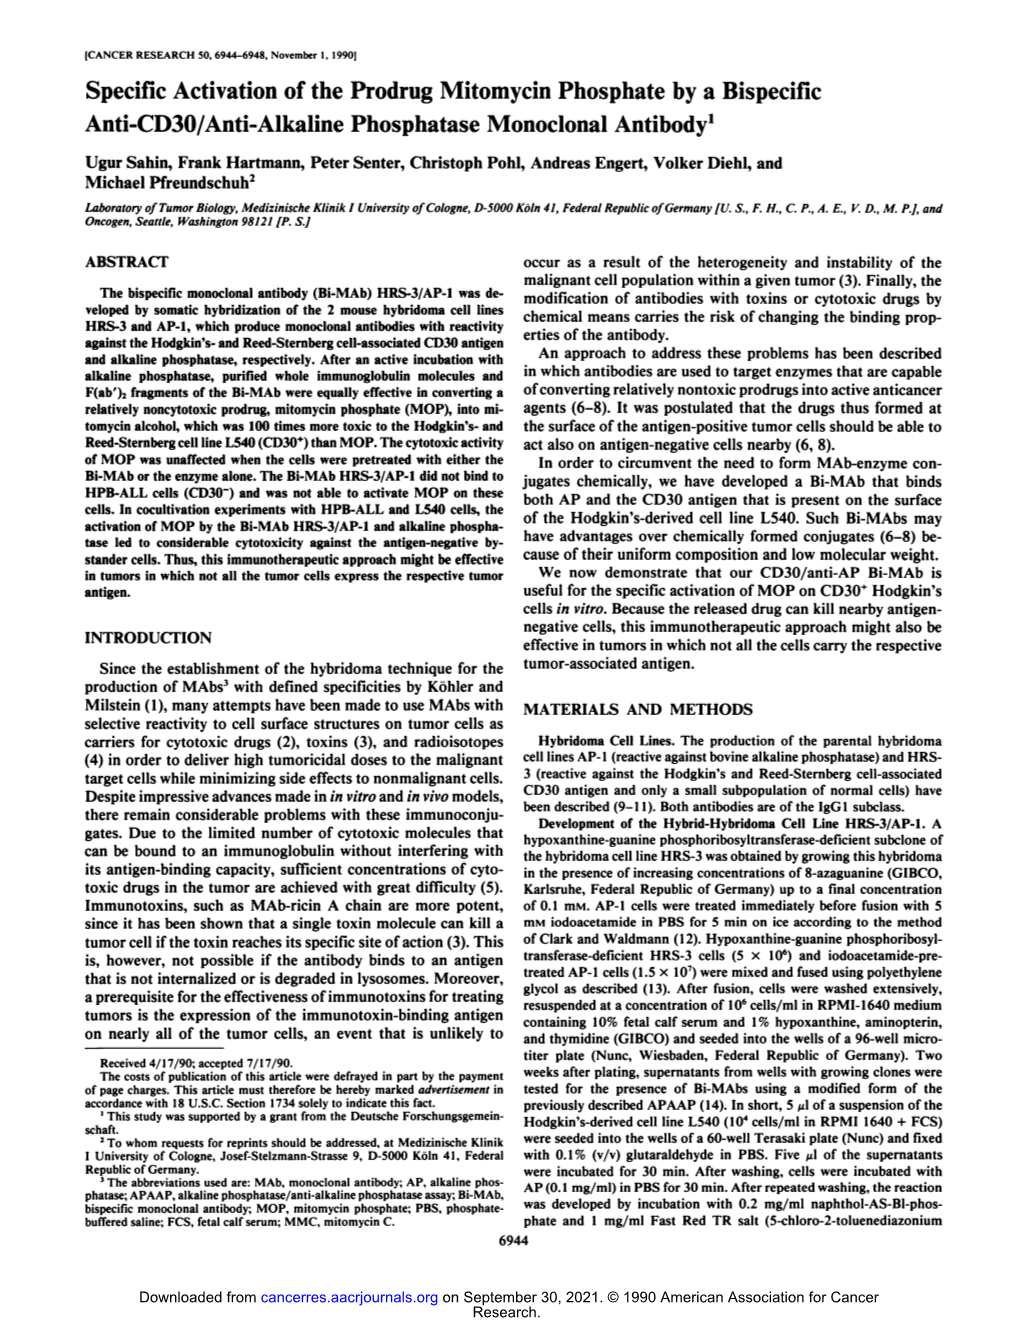 Specific Activation of the Prodrug Mitomycin Phosphate by a Bispecific Anti-CD30/Anti-Alkaline Phosphatase Monoclonal Antibody1